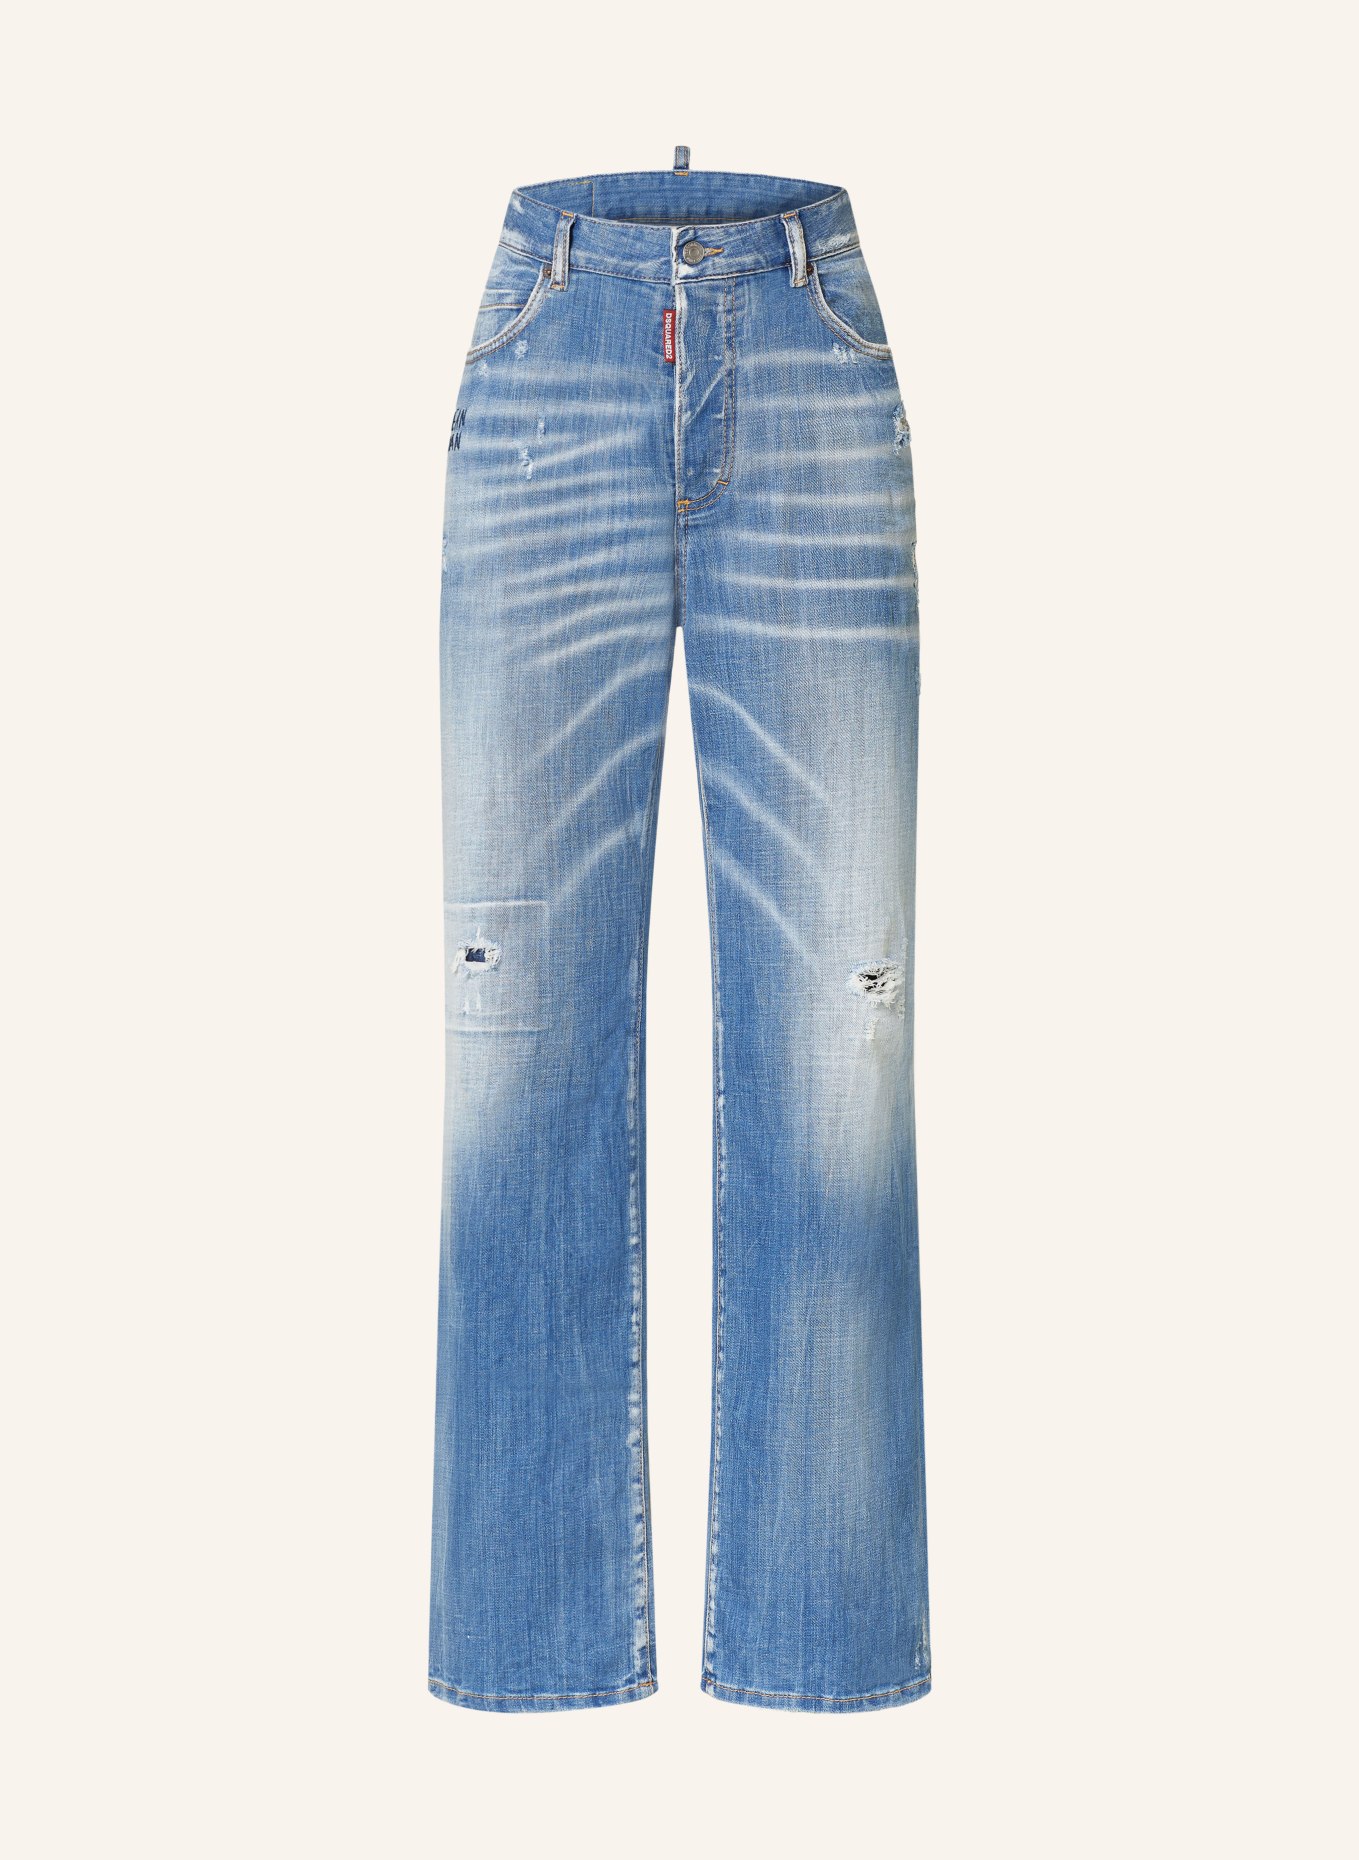 DSQUARED2 Jeans ROADIE, Farbe: 470 NAVY BLUE (Bild 1)